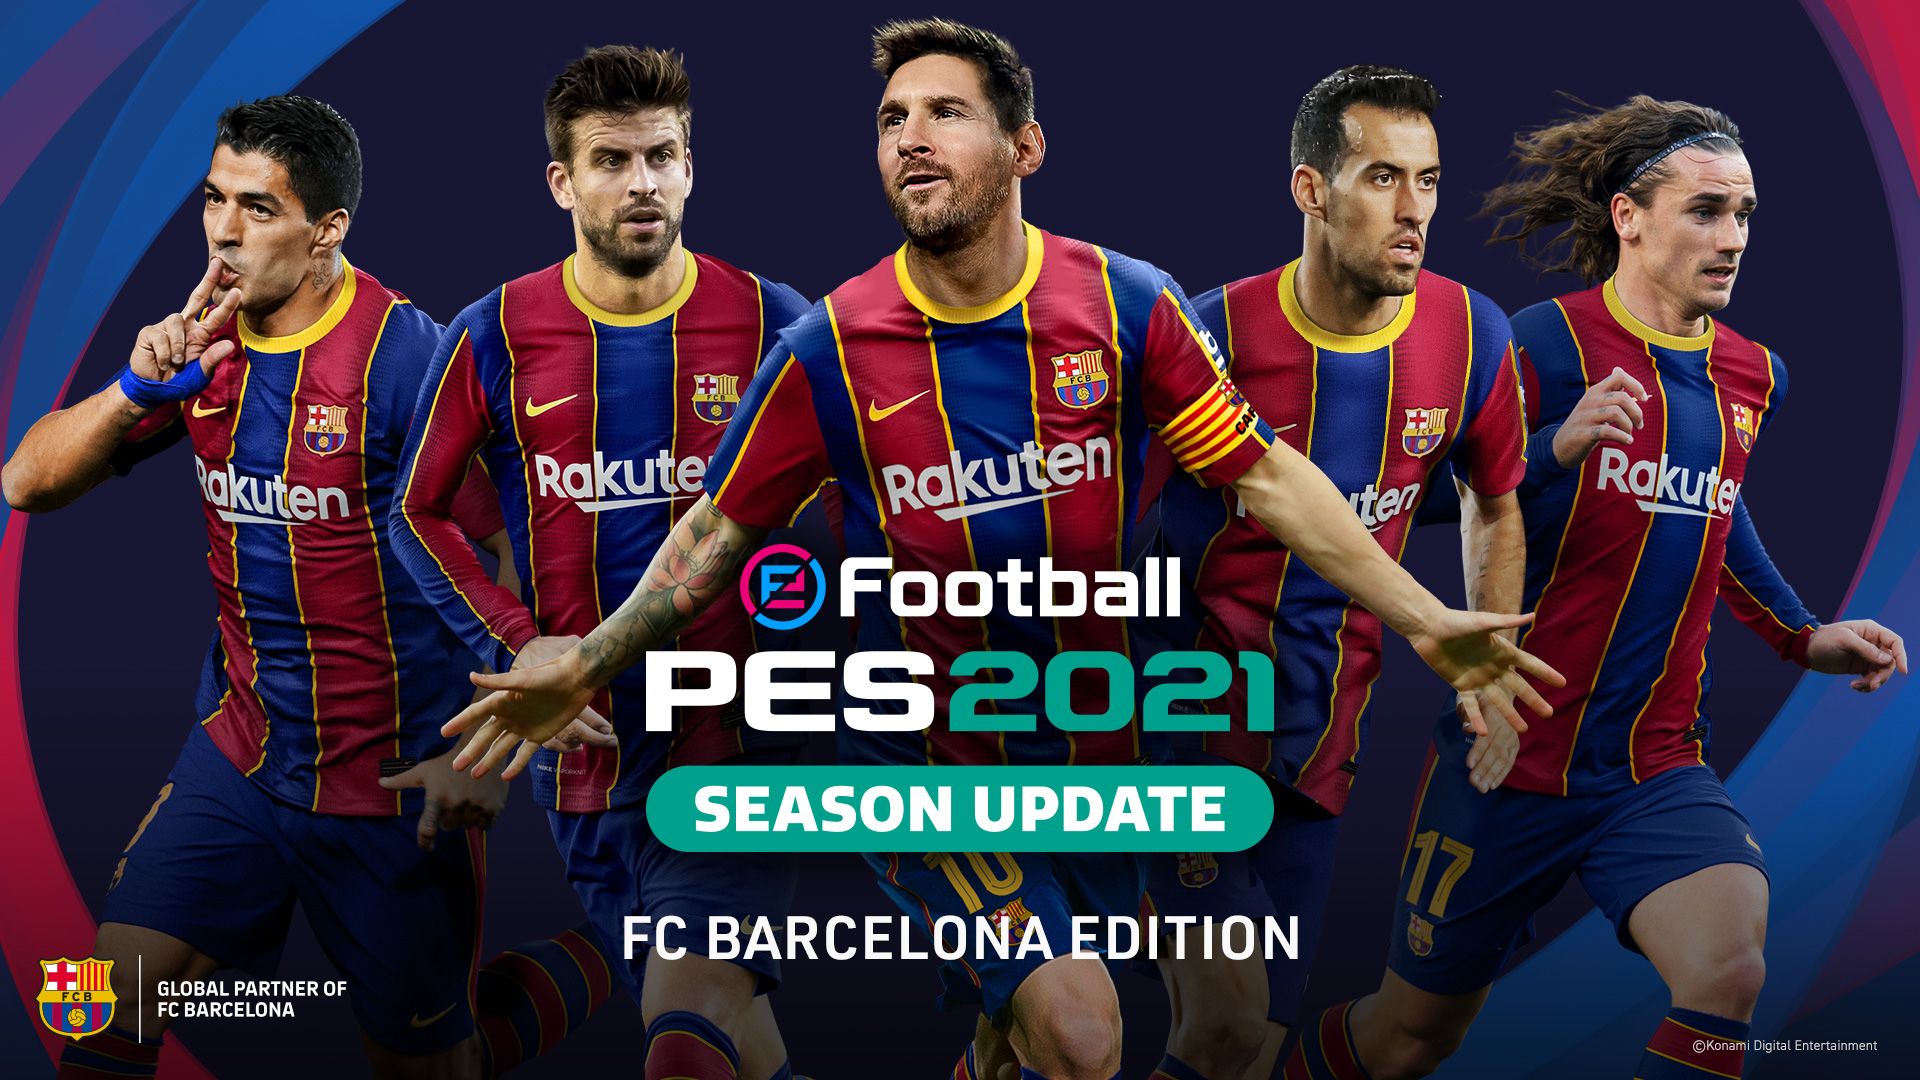 eFootball PES 2021 Season Update cover revealed